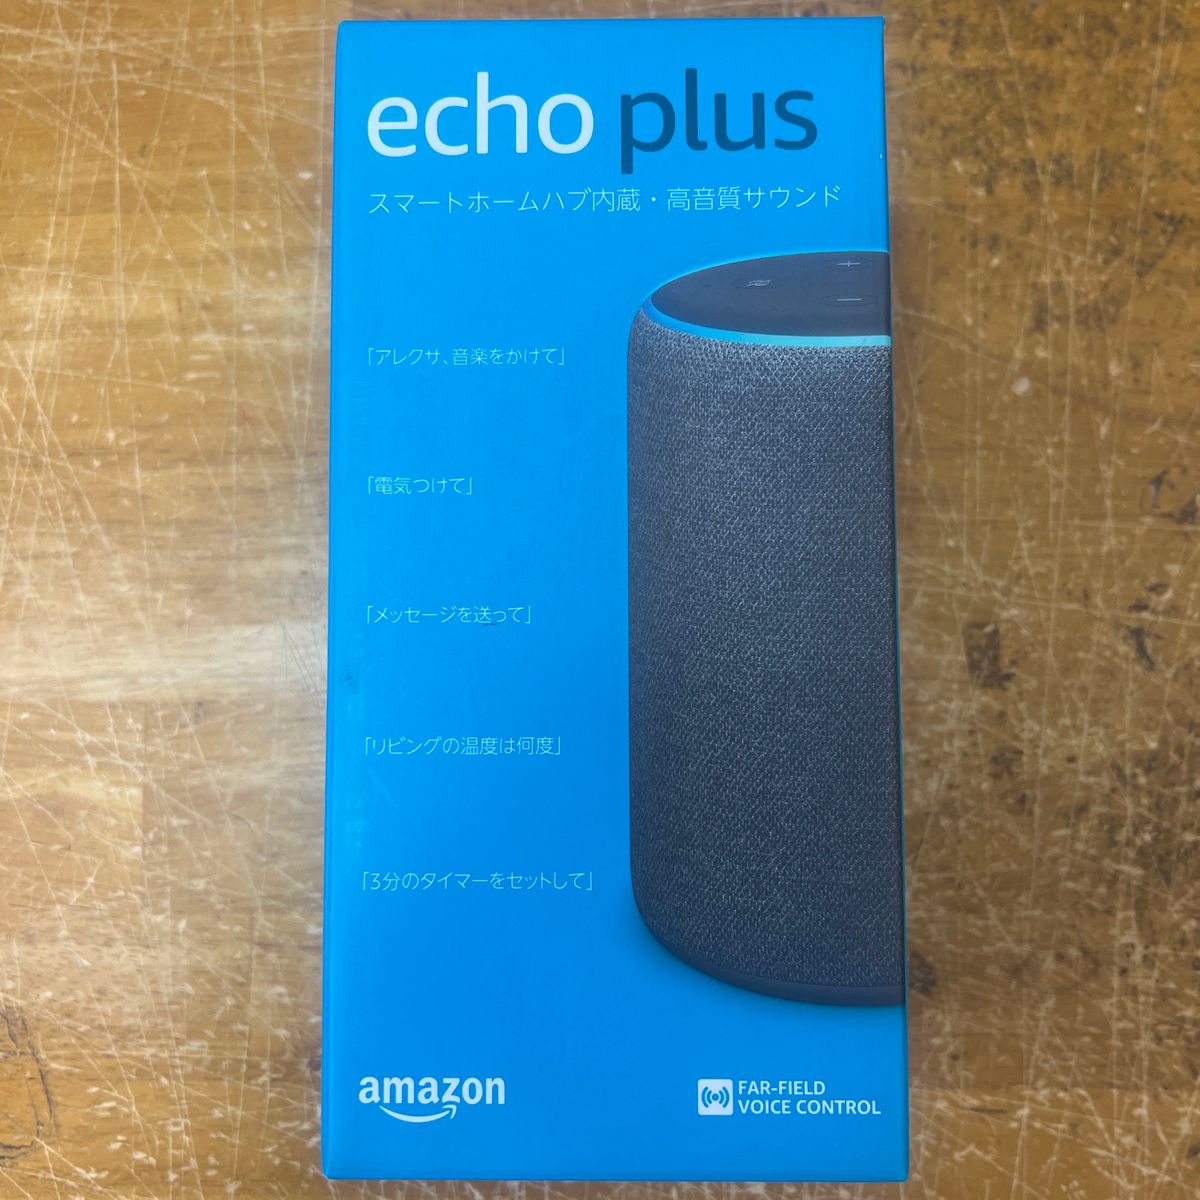 Echo Plus (エコープラス) 第2世代 - スマートスピーカー with Alexa、チャコール Amazon Echo